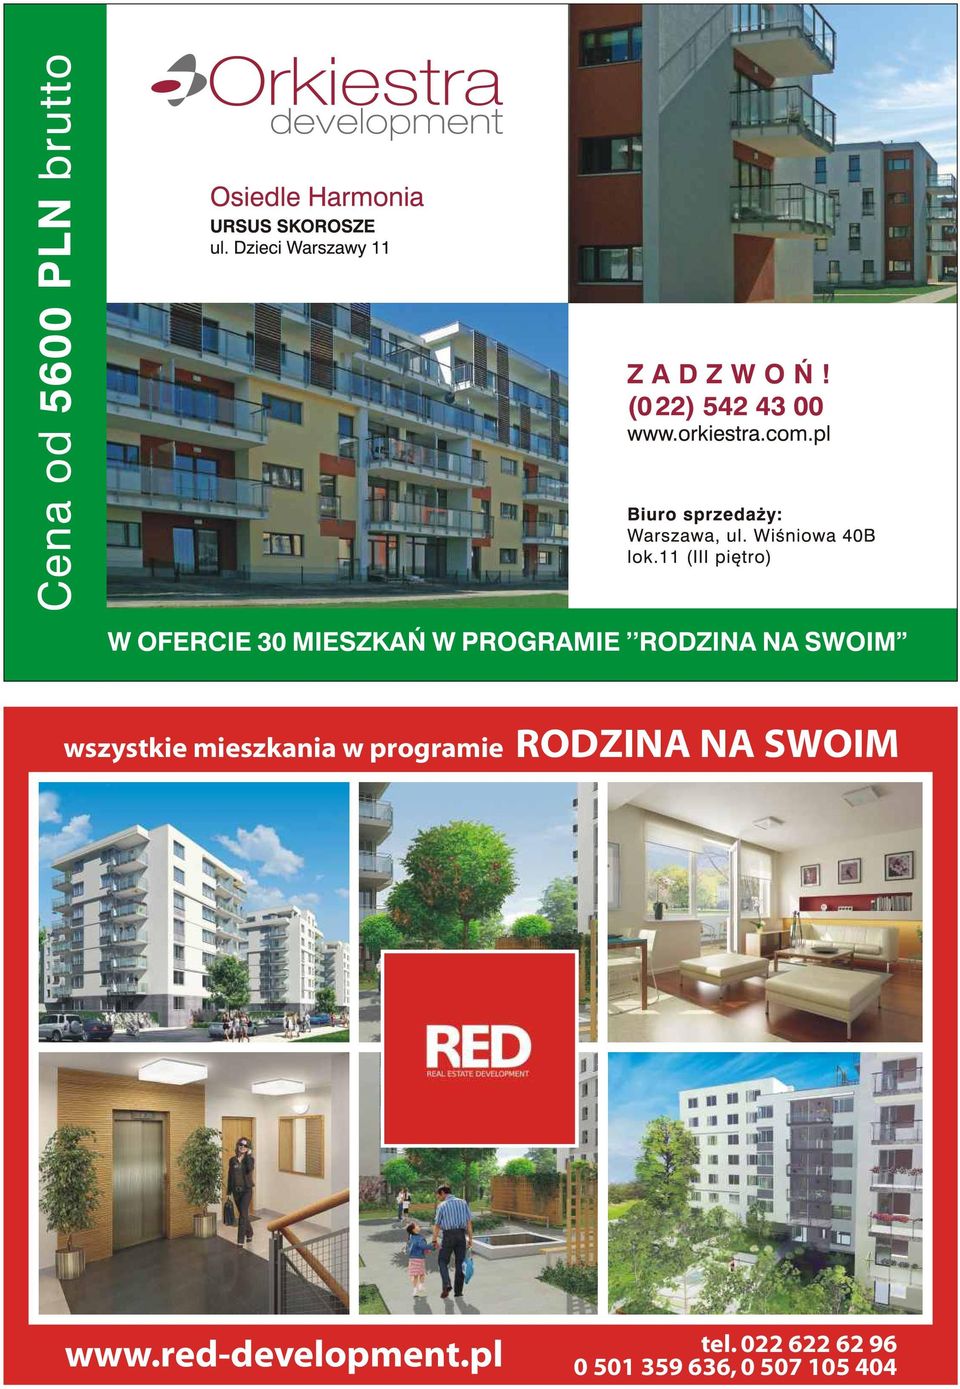 www.red-development.pl tel.